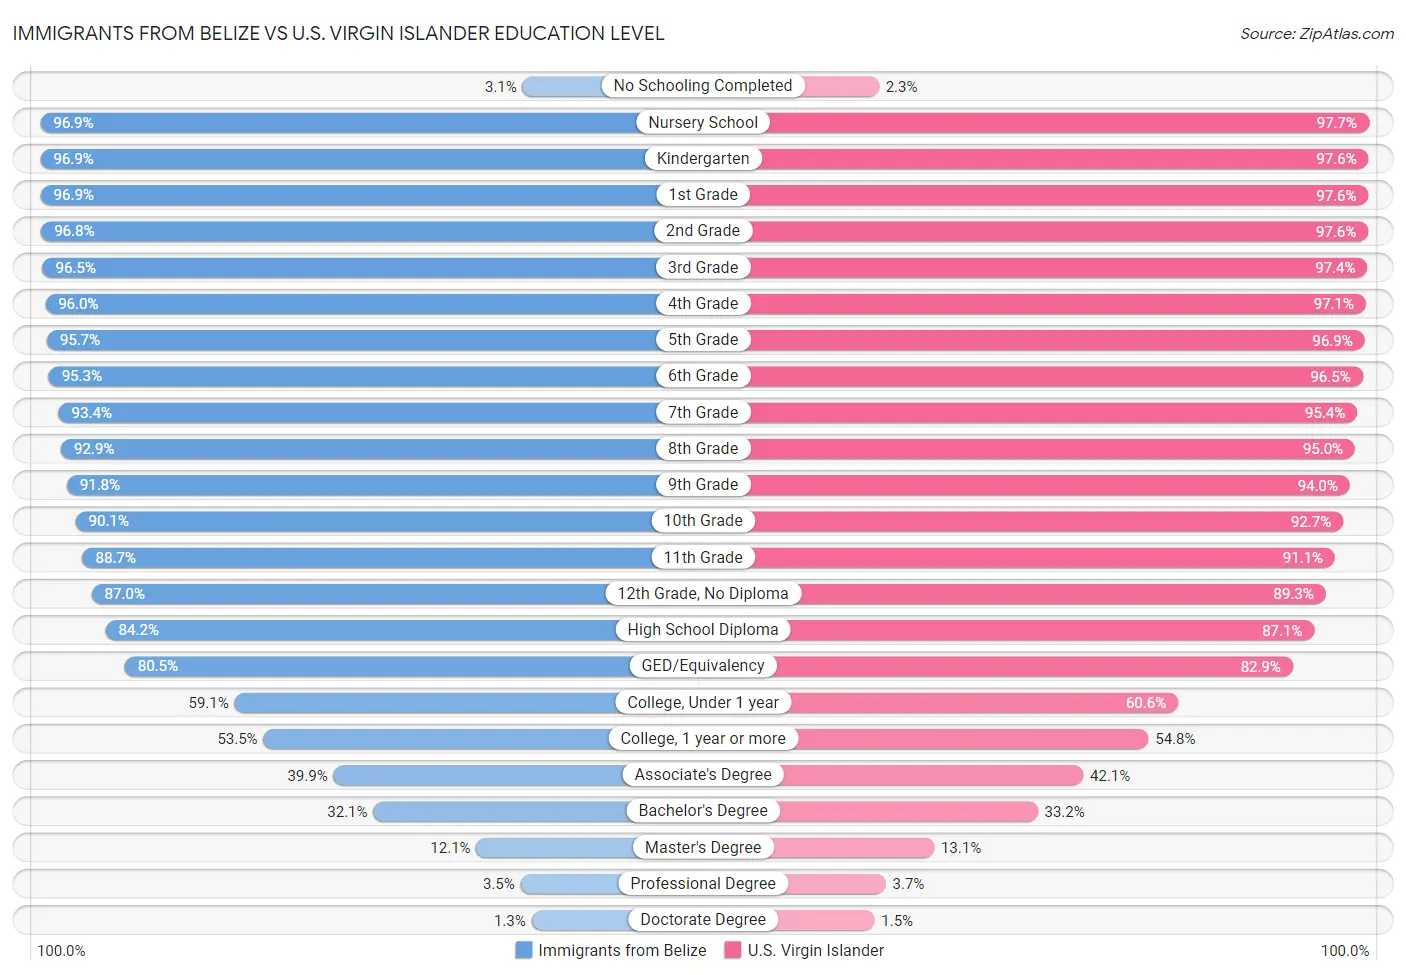 Immigrants from Belize vs U.S. Virgin Islander Education Level